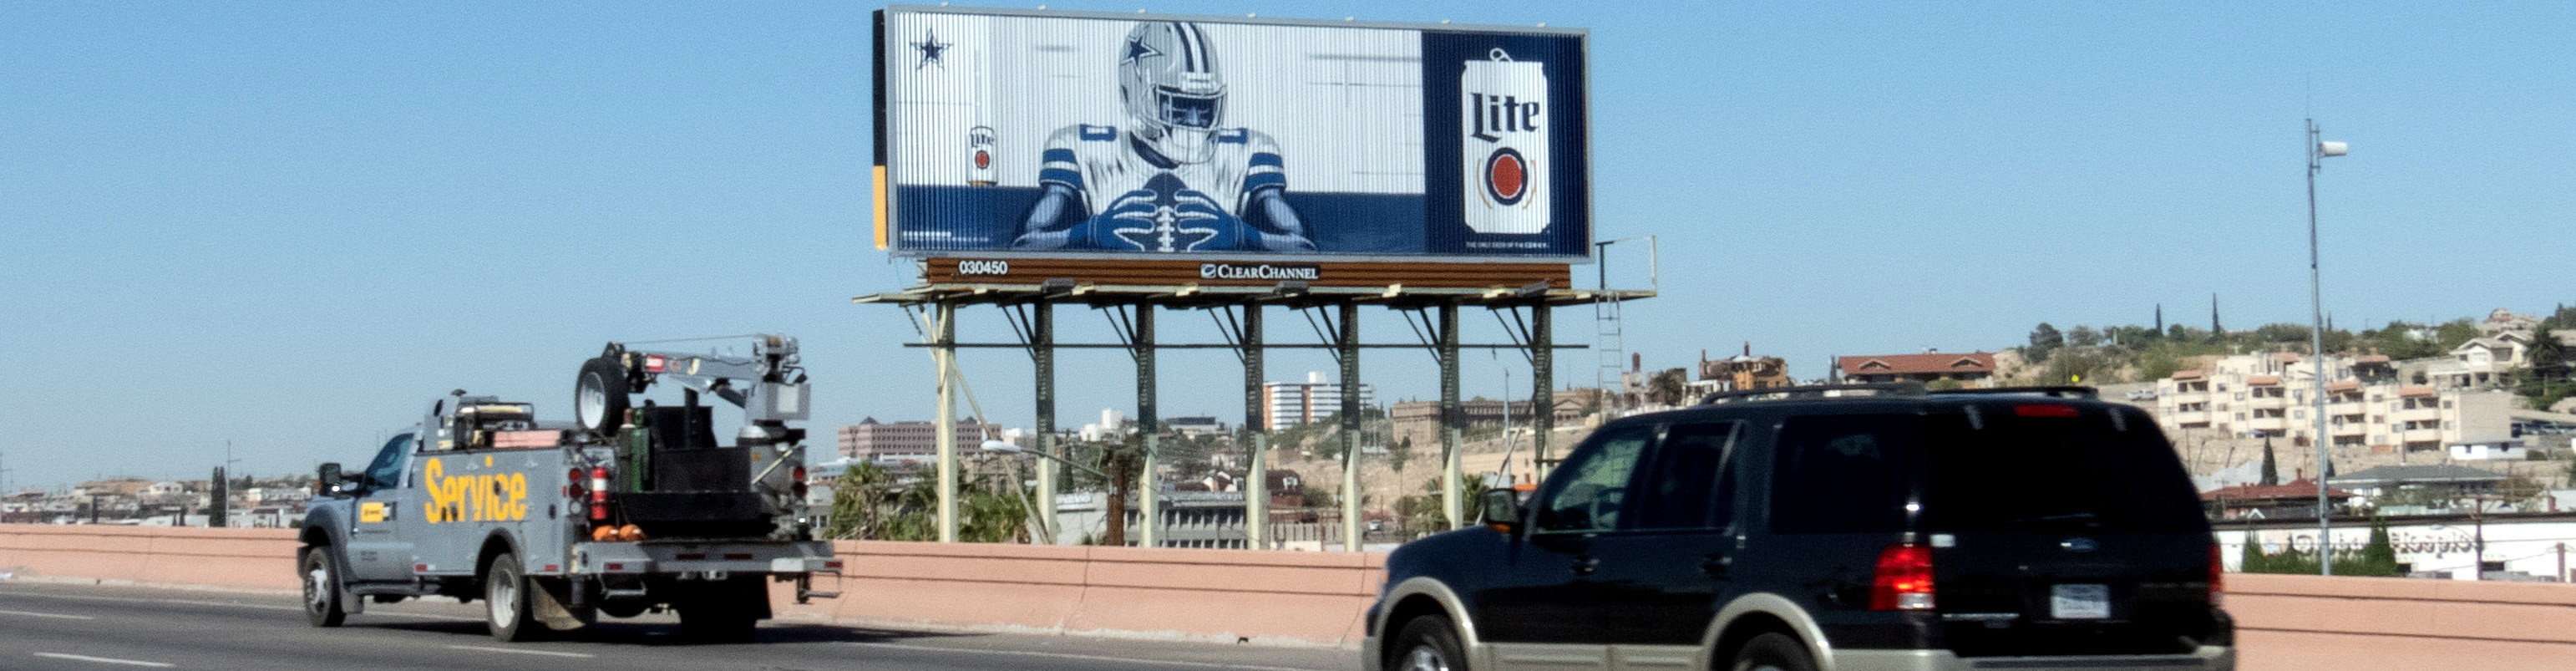 Miller Lite Dallas Cowboys NFL Banner